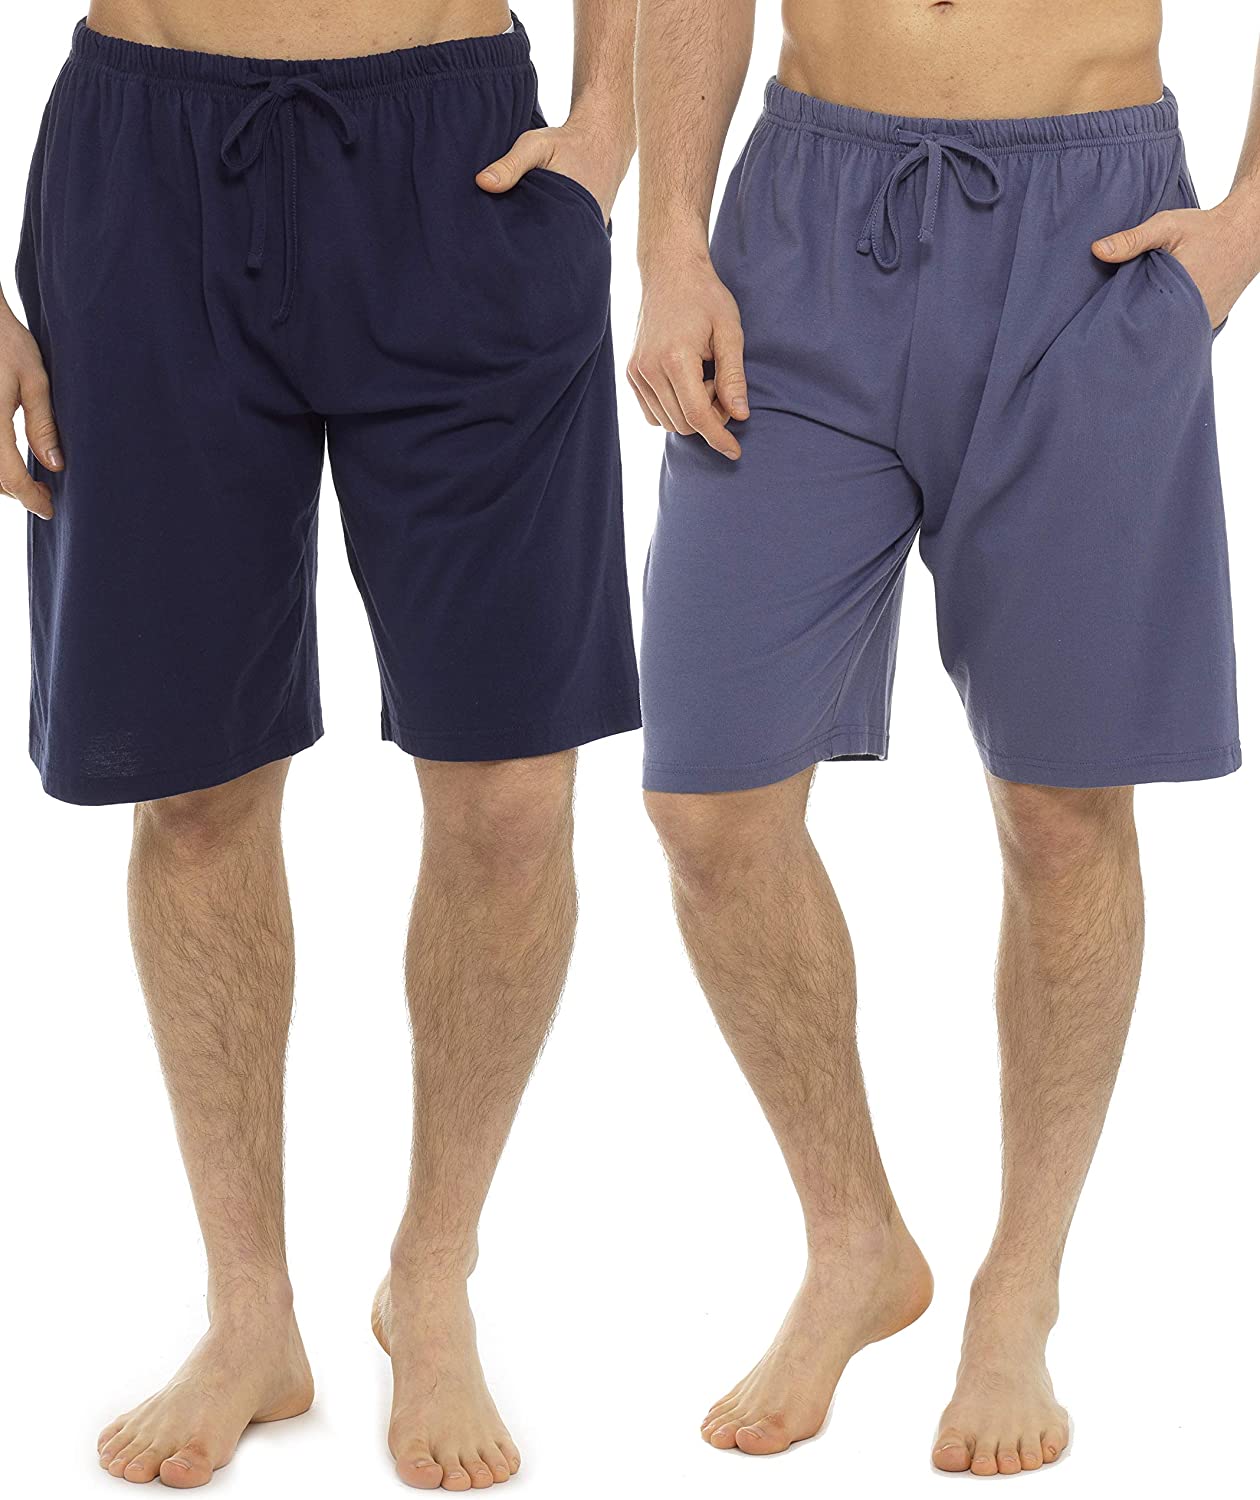 Tom Franks Mens Pack Two Shorts - Cotton Sleepwear Lounge Wear Pyjama Shorts